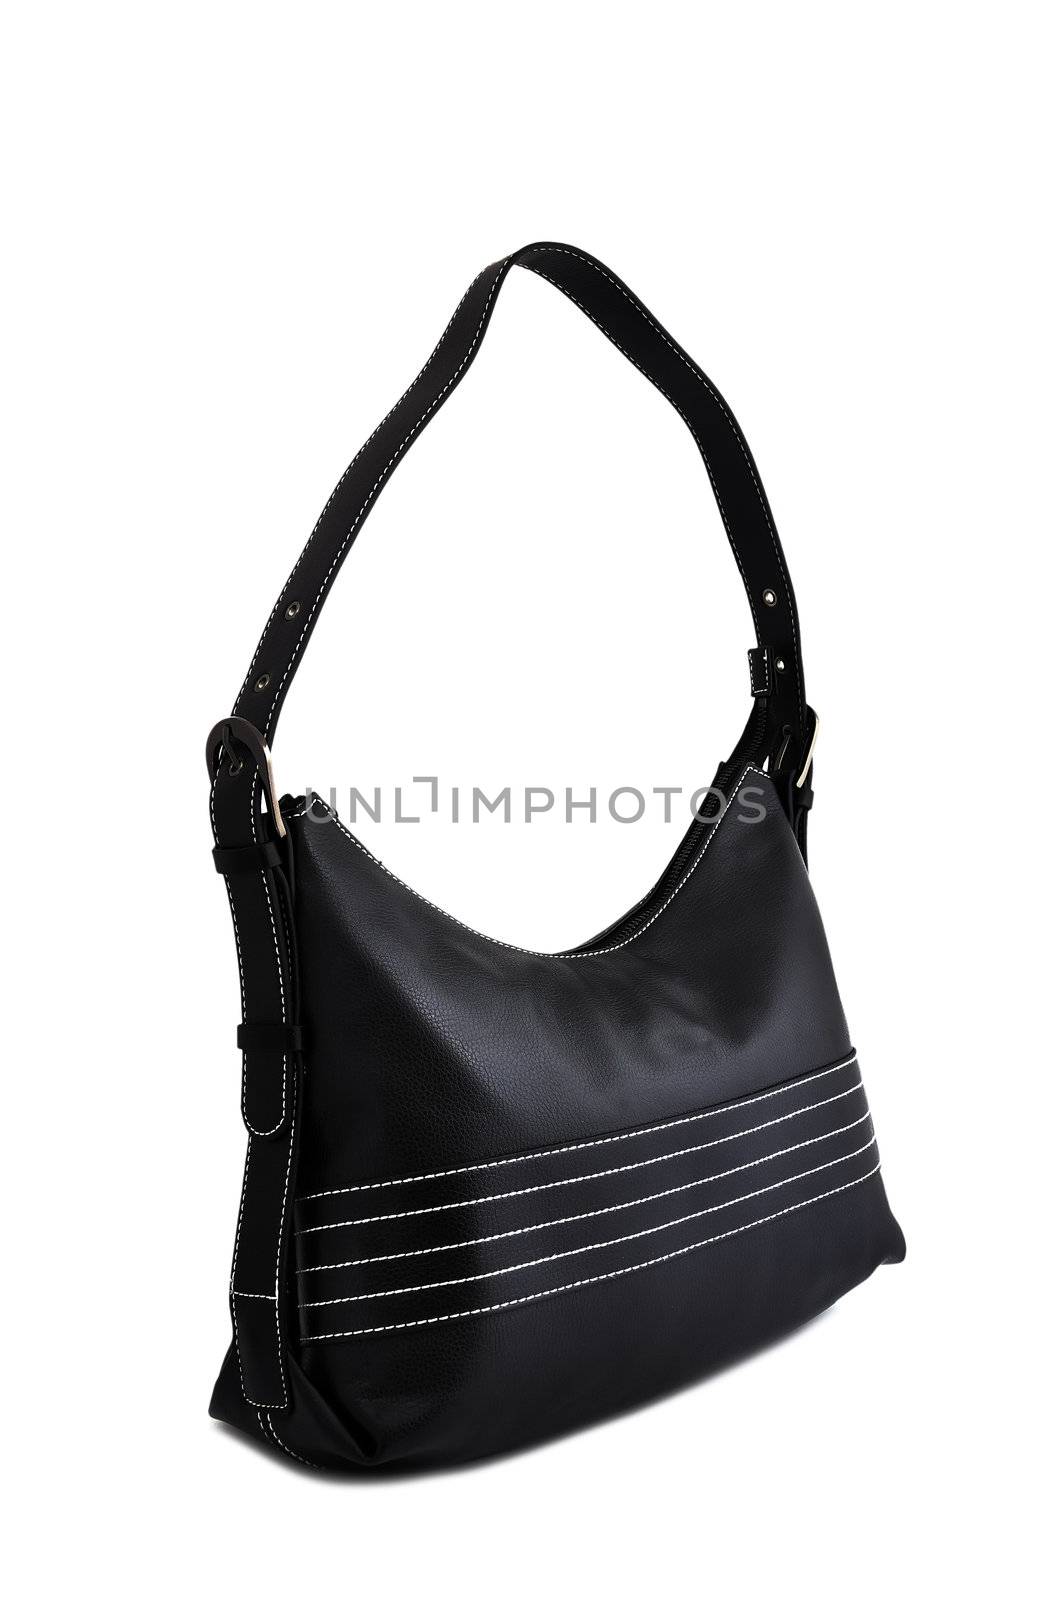 black handbag by vetkit